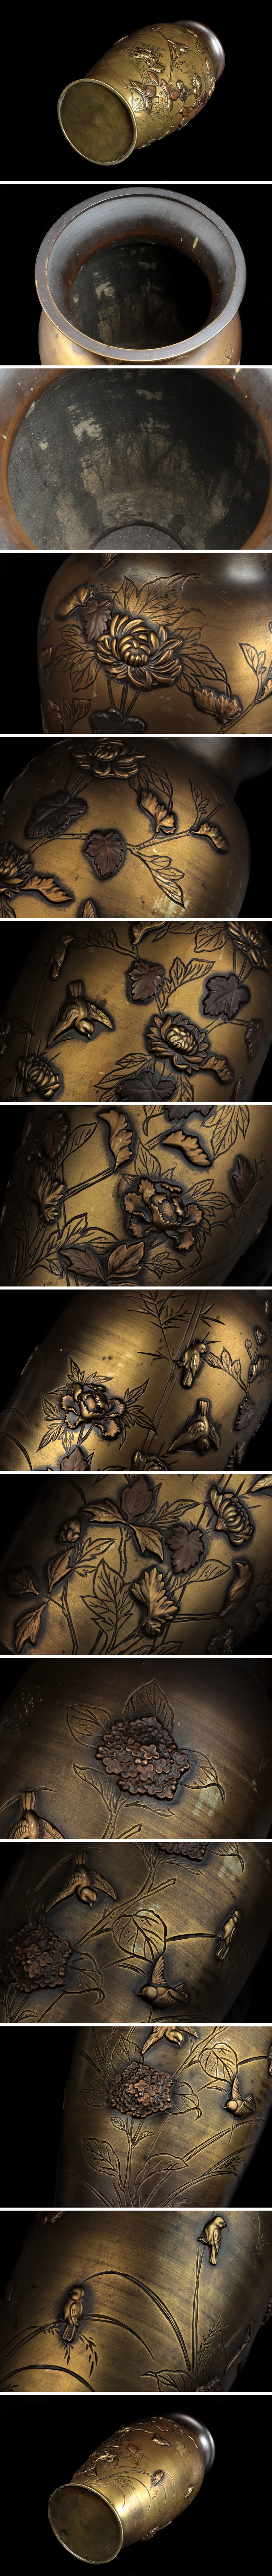 SALE大人気細密写実な花鳥が巧みな技で表現されいます 明治期 金工師造 黄銅 花鳥図 花瓶 花入 一対 細密彫刻 銅器 華道具 骨董品 美術品 8729tjy その他